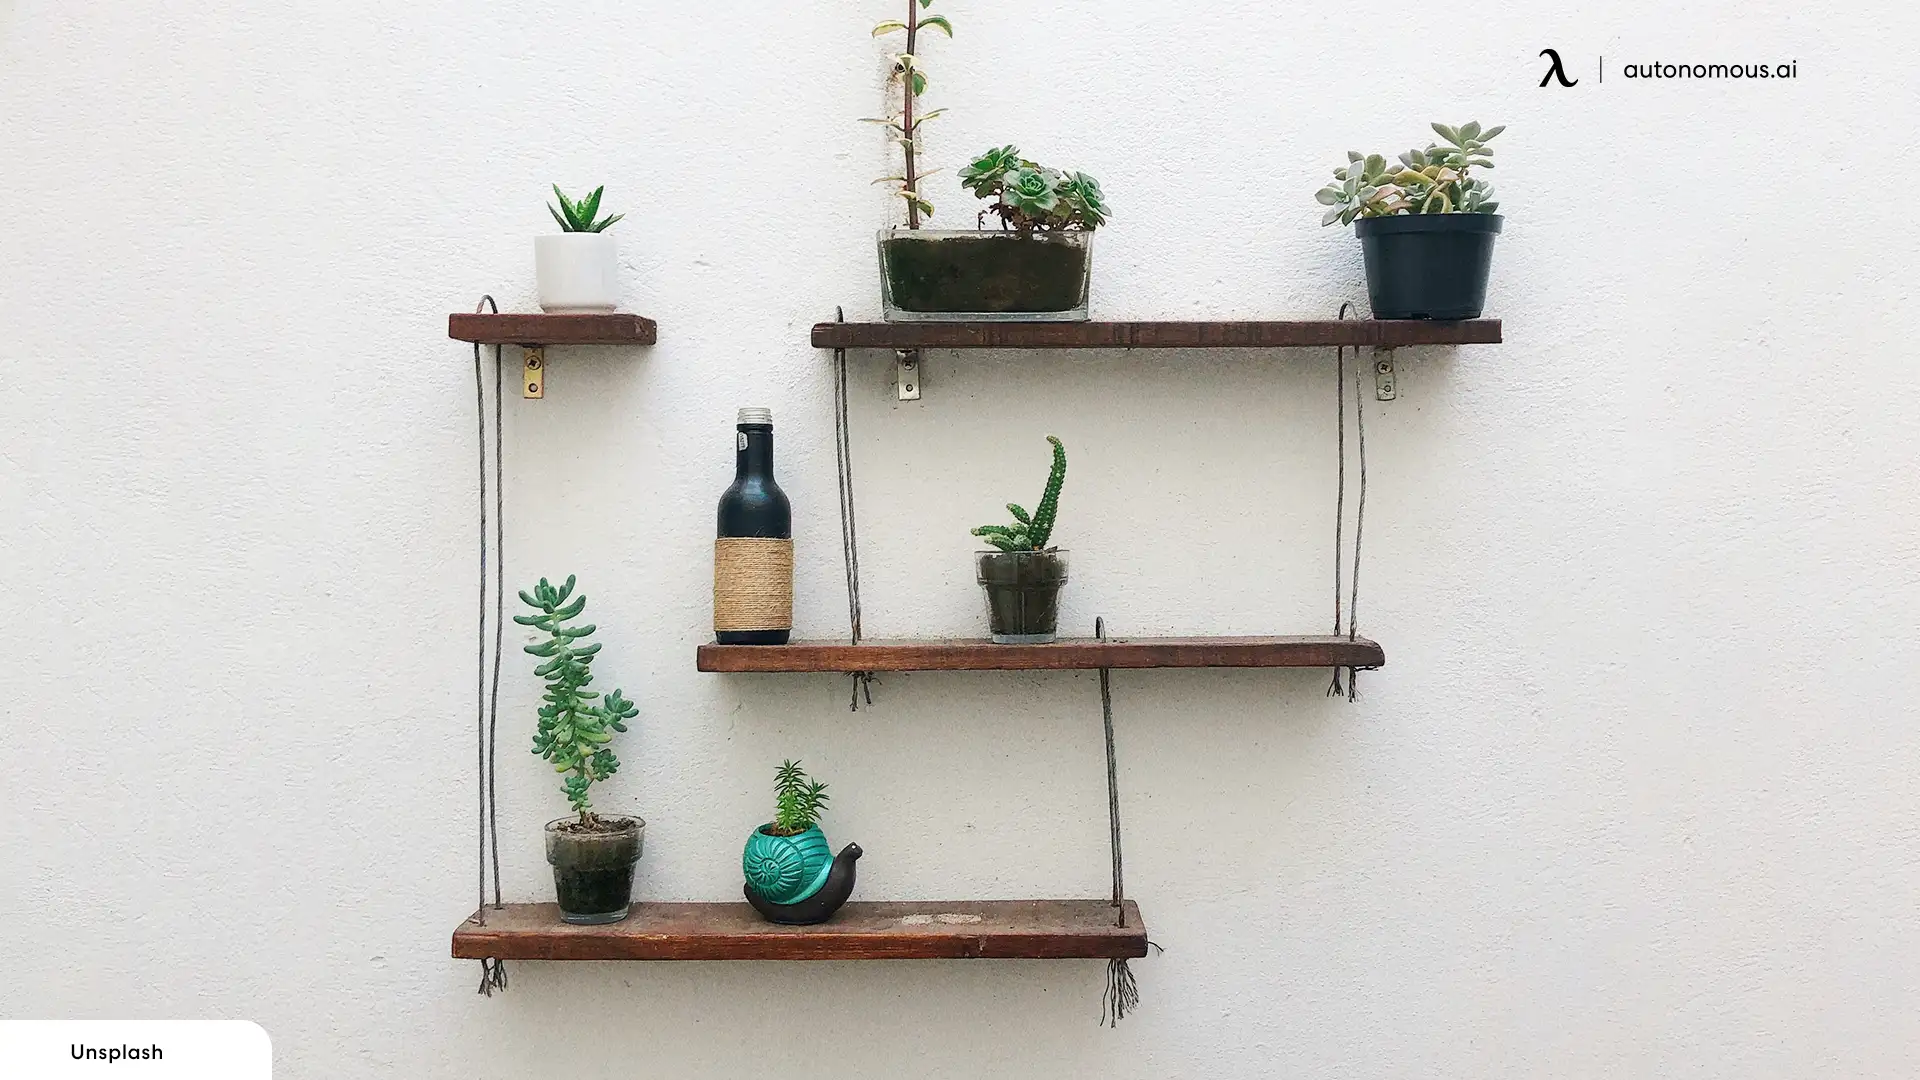 A Wall of Shelves